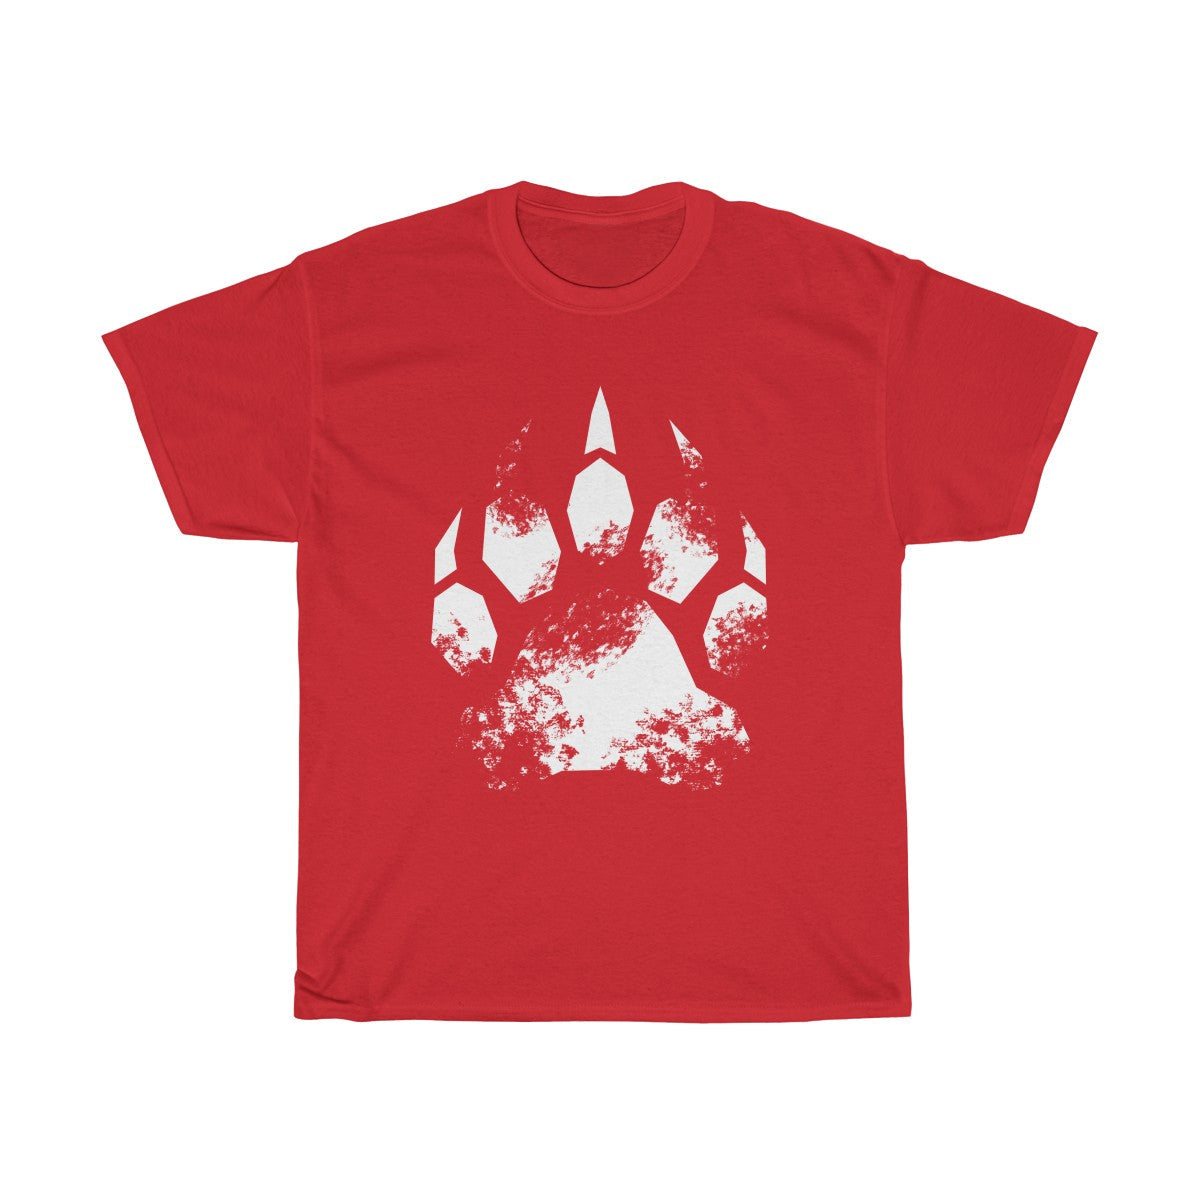 Splash White Bear - T-Shirt T-Shirt Wexon Red S 